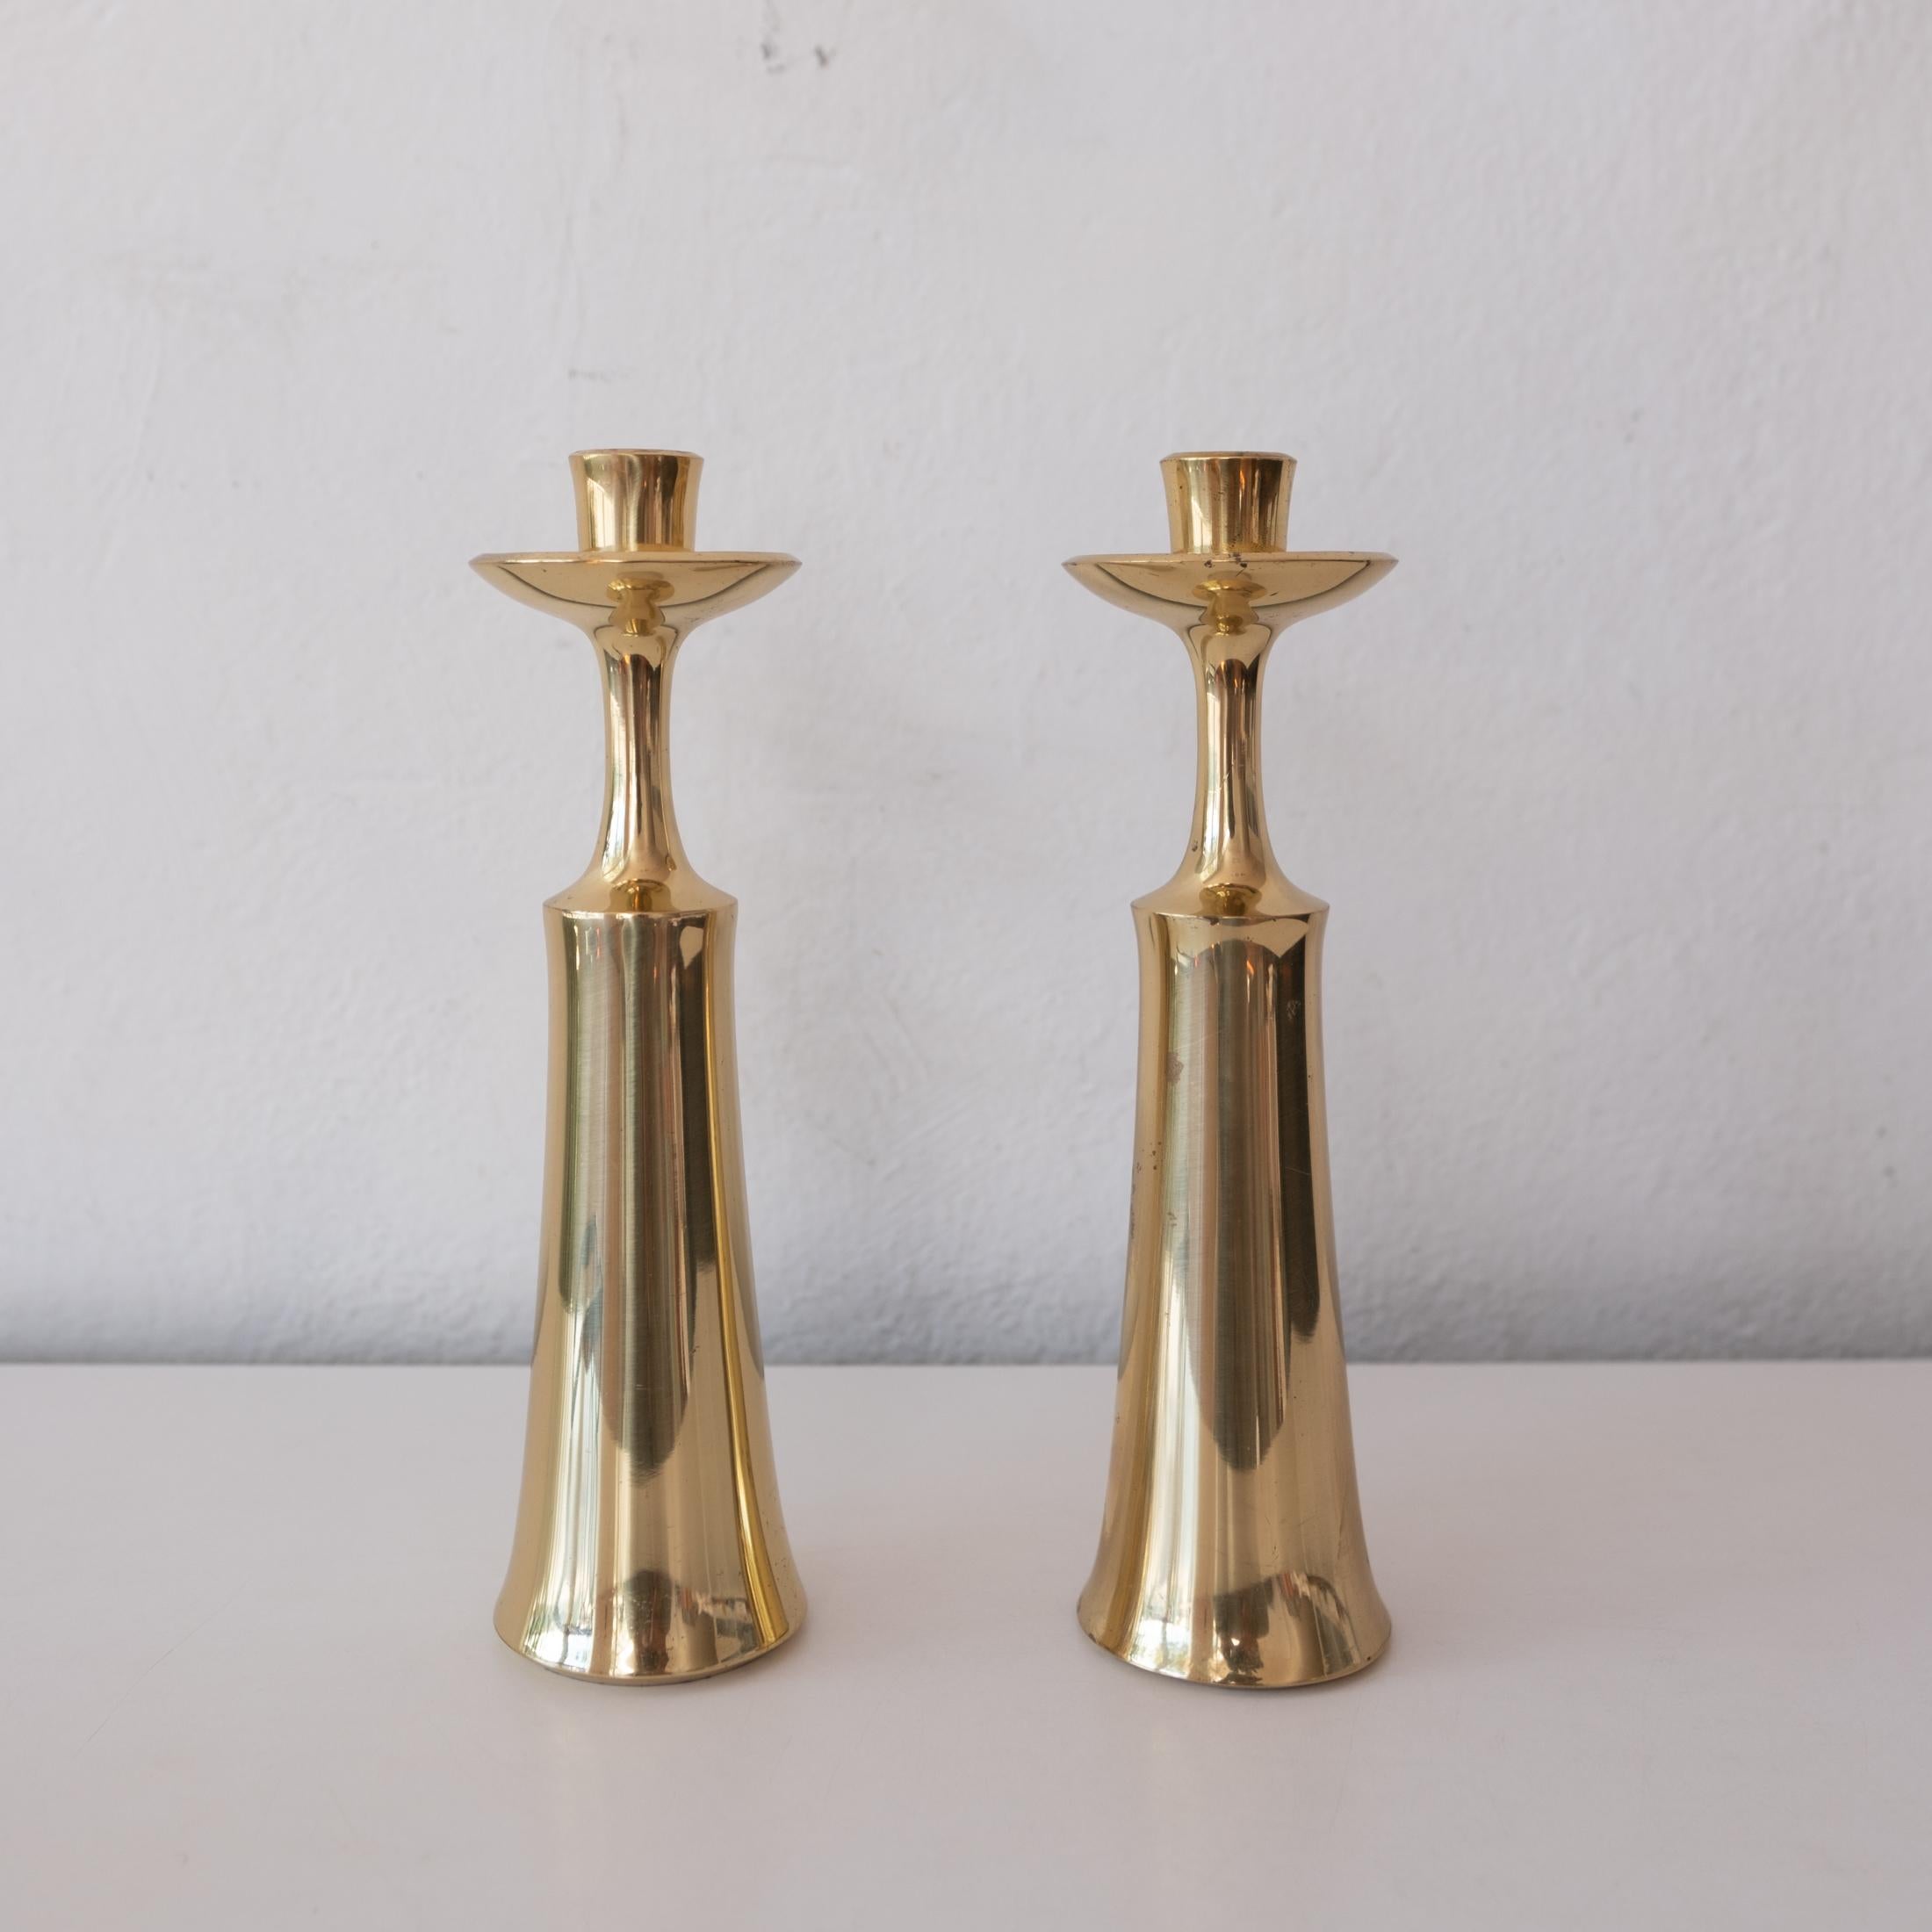 Brass Candlesticks by Jens Quistgaard for Dansk For Sale 2